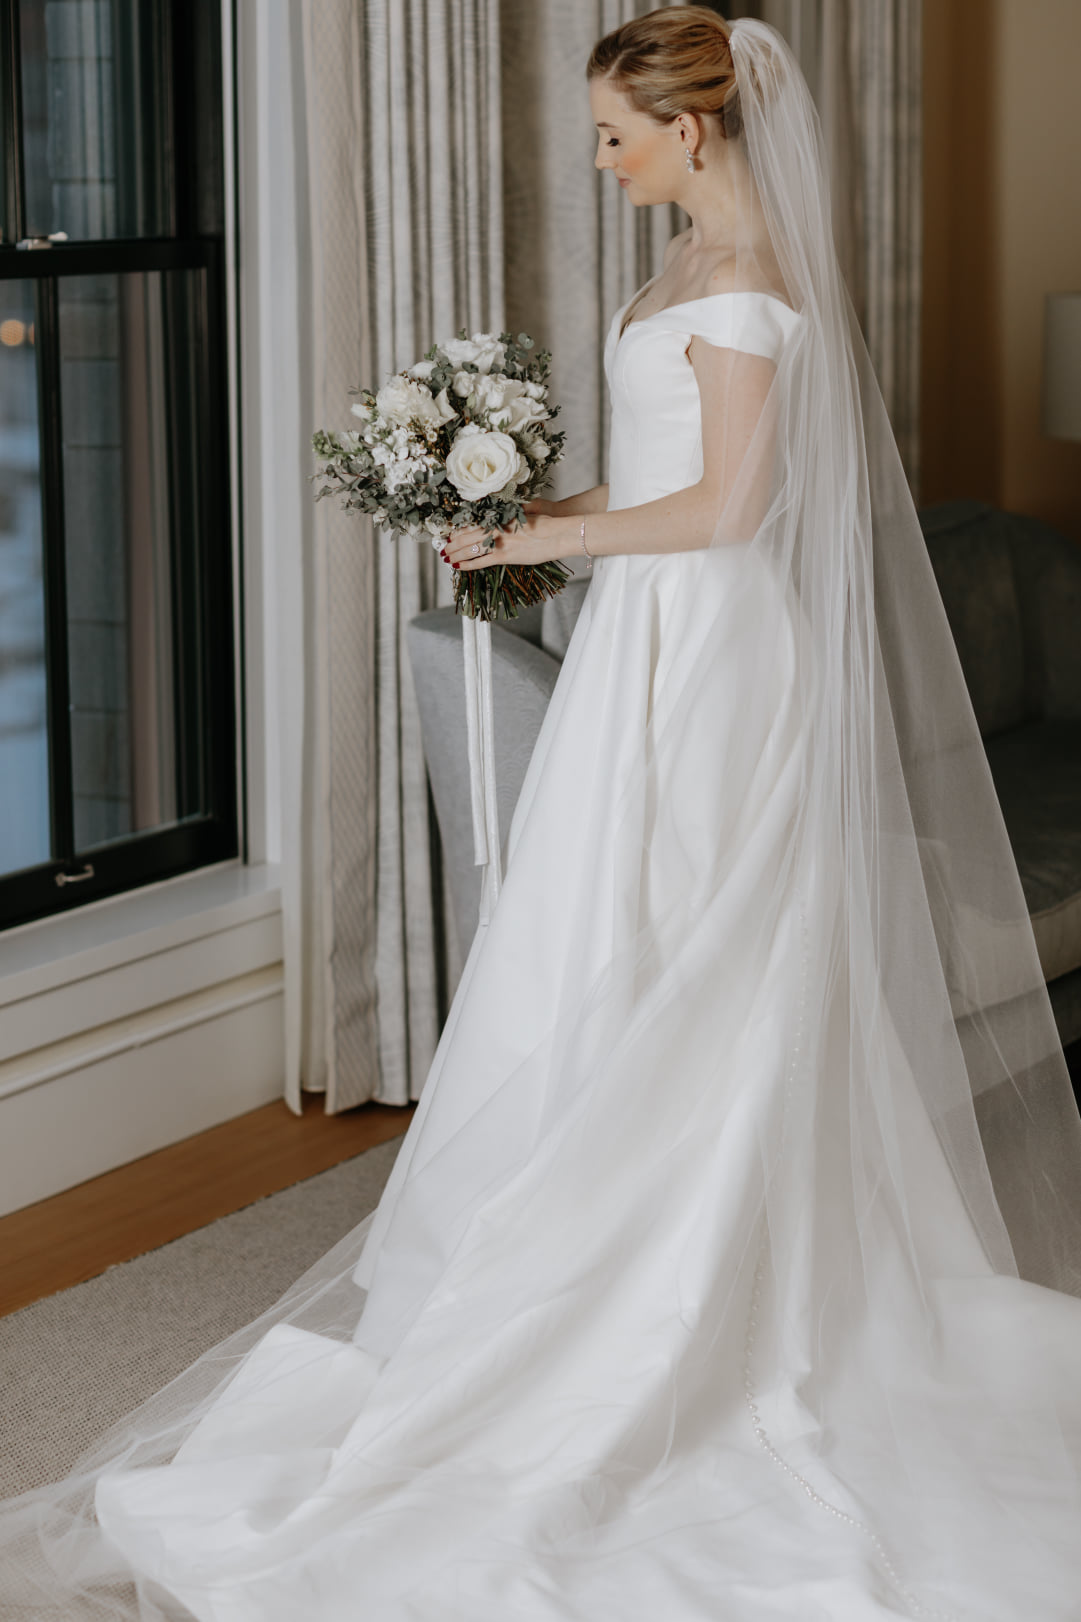 Kelly Costa's Wedding (2022) - Kelly Costa Photo (44727792) - Fanpop